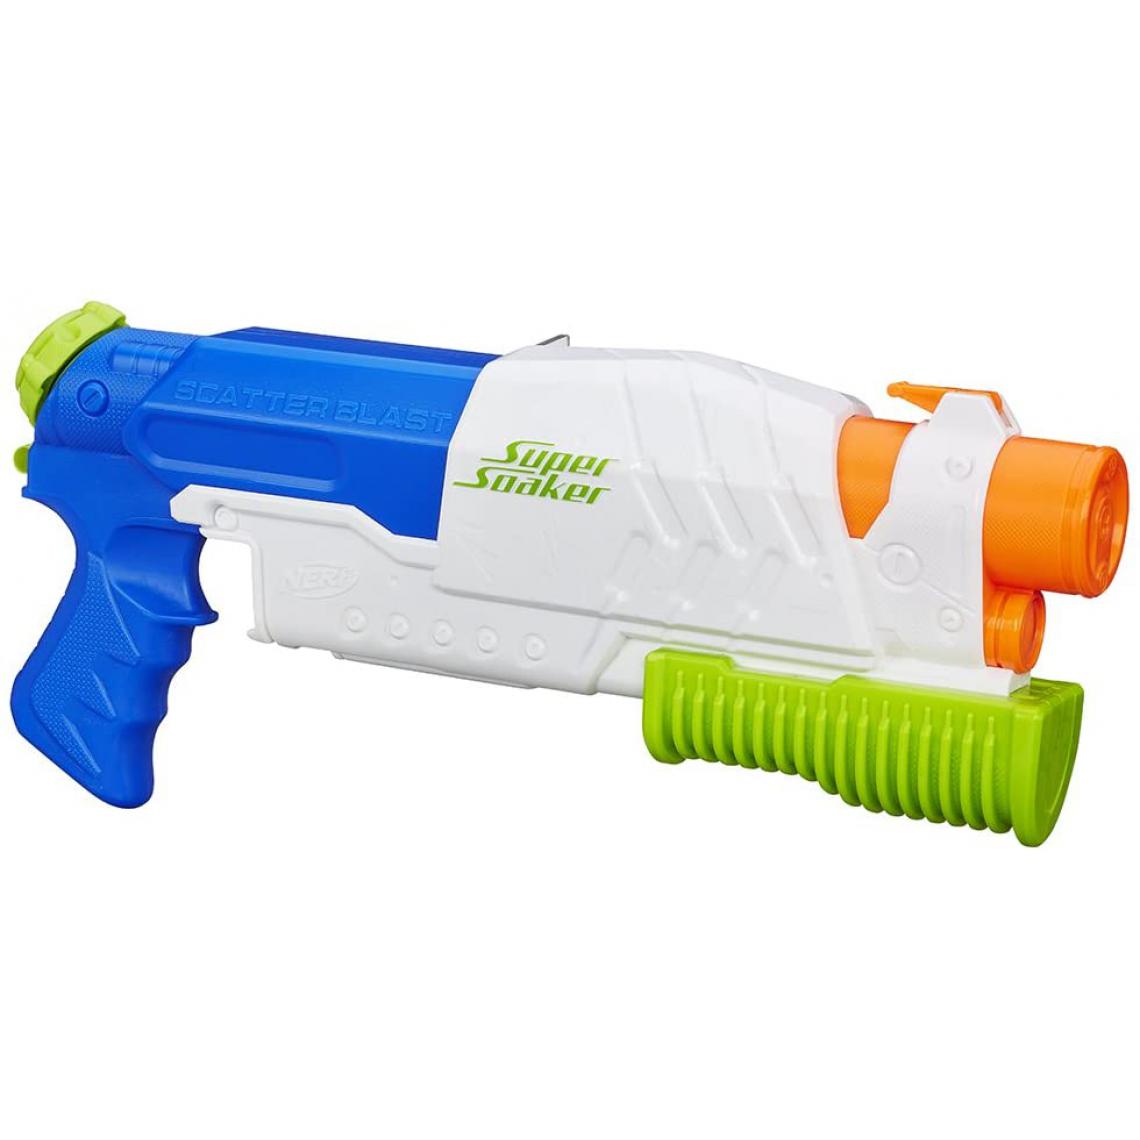 Nerf - pistolet a eau Super Soaker Scatter Blast bleu blanc vert - Jeux d'adresse